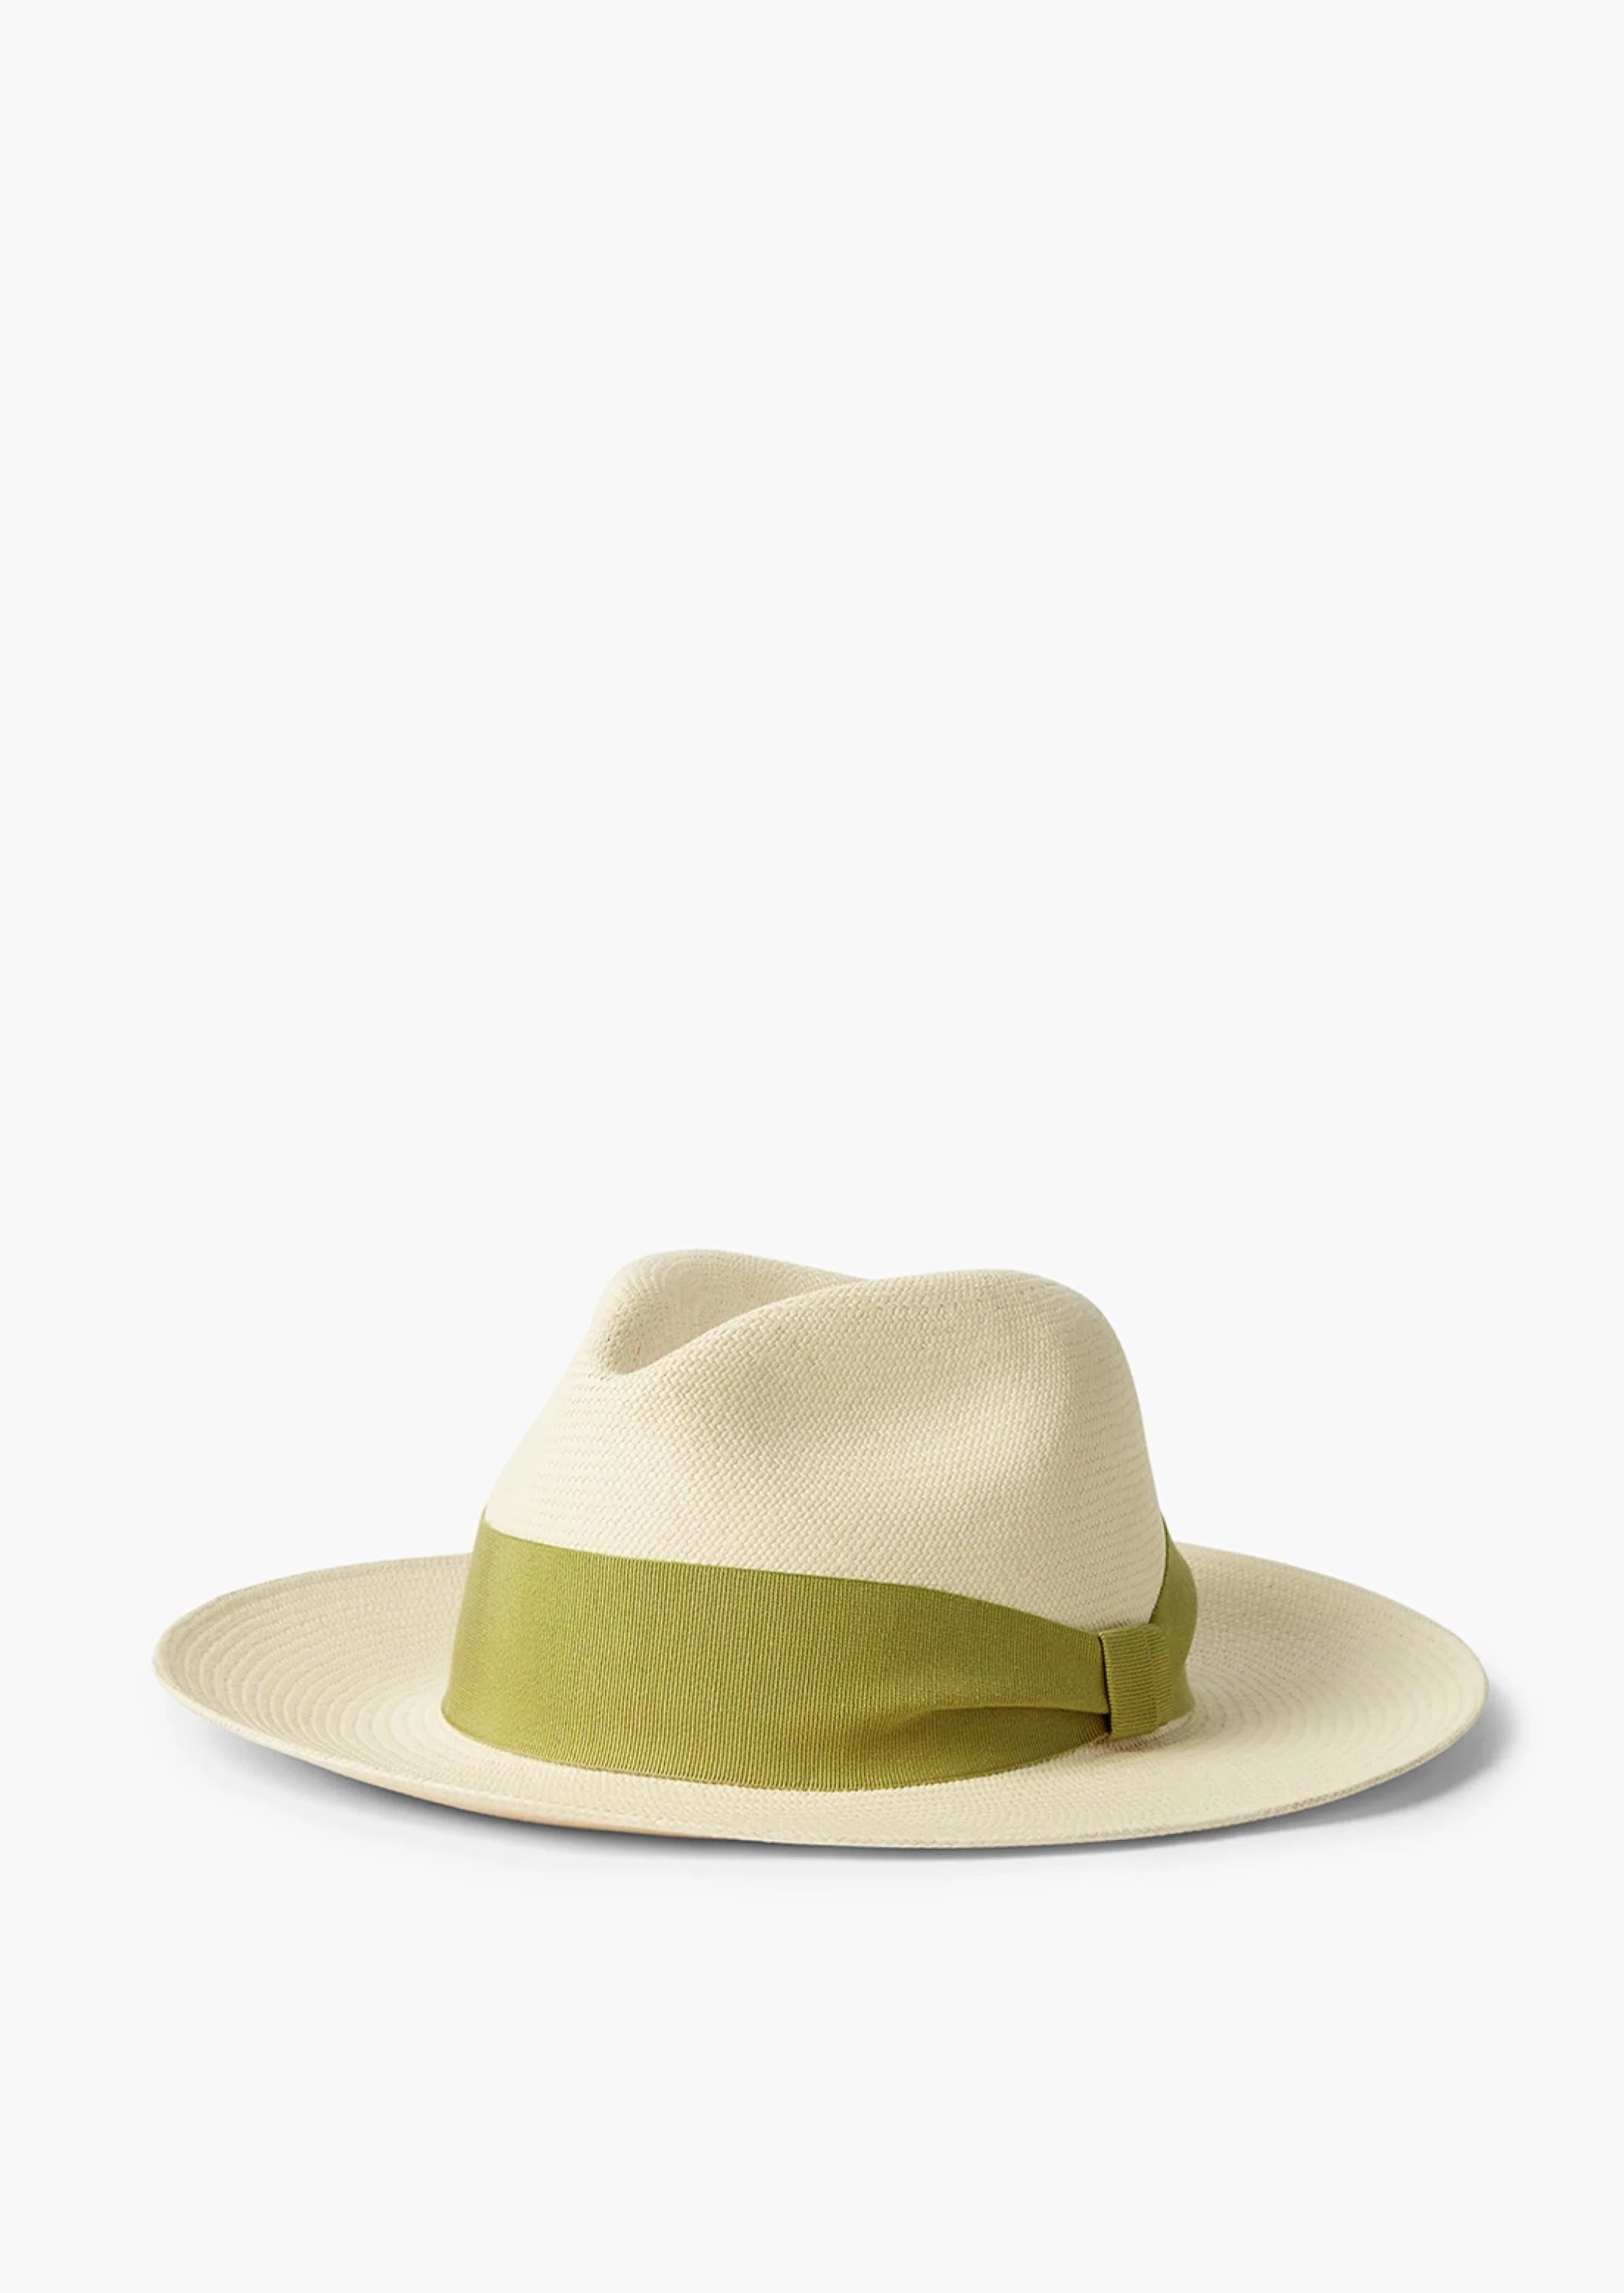 Rafael Panama Hat Light Celadon Green